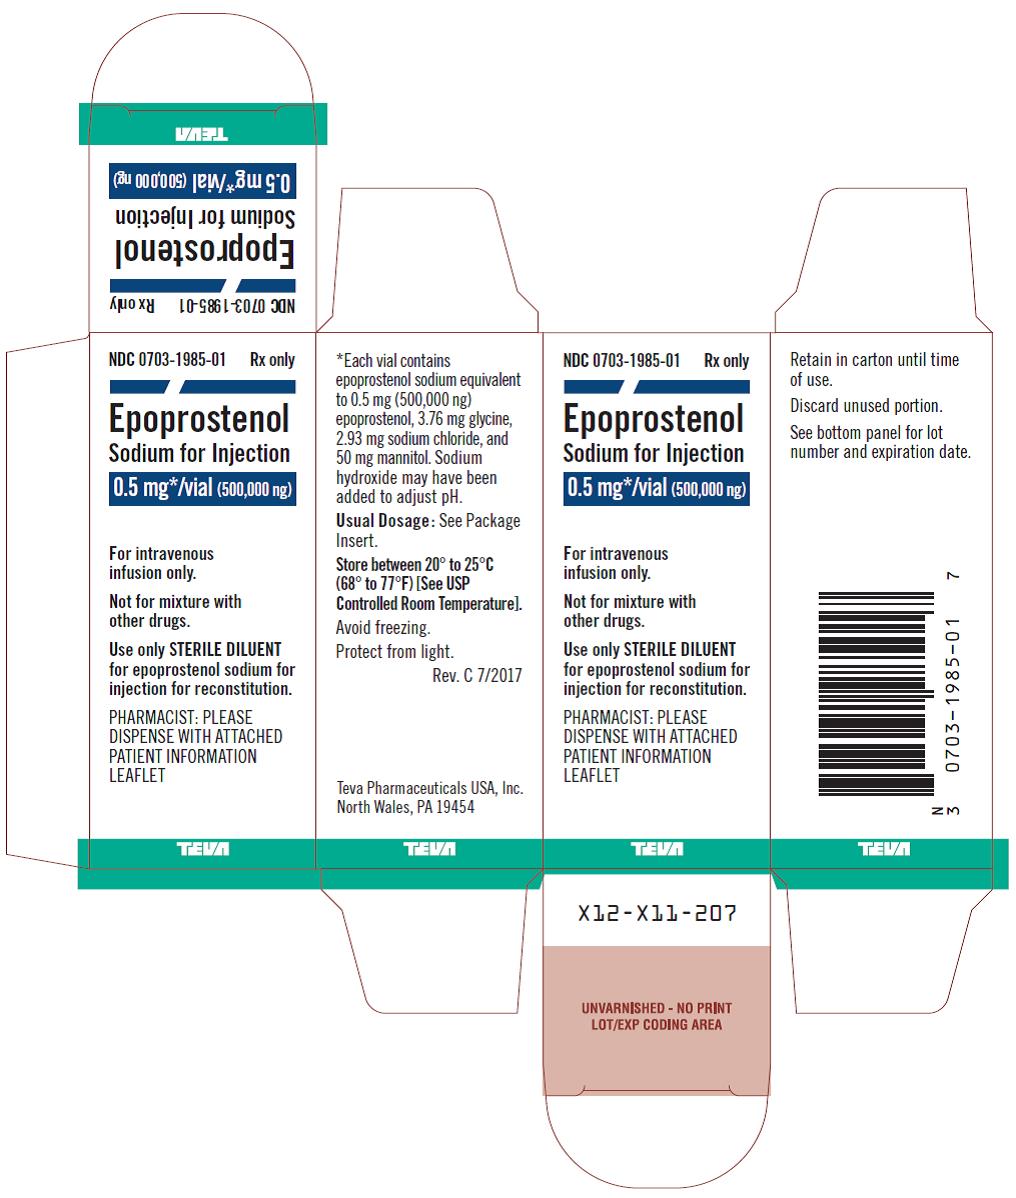 Epoprostenol Sodium for Injection 0.5 mgvial, Carton